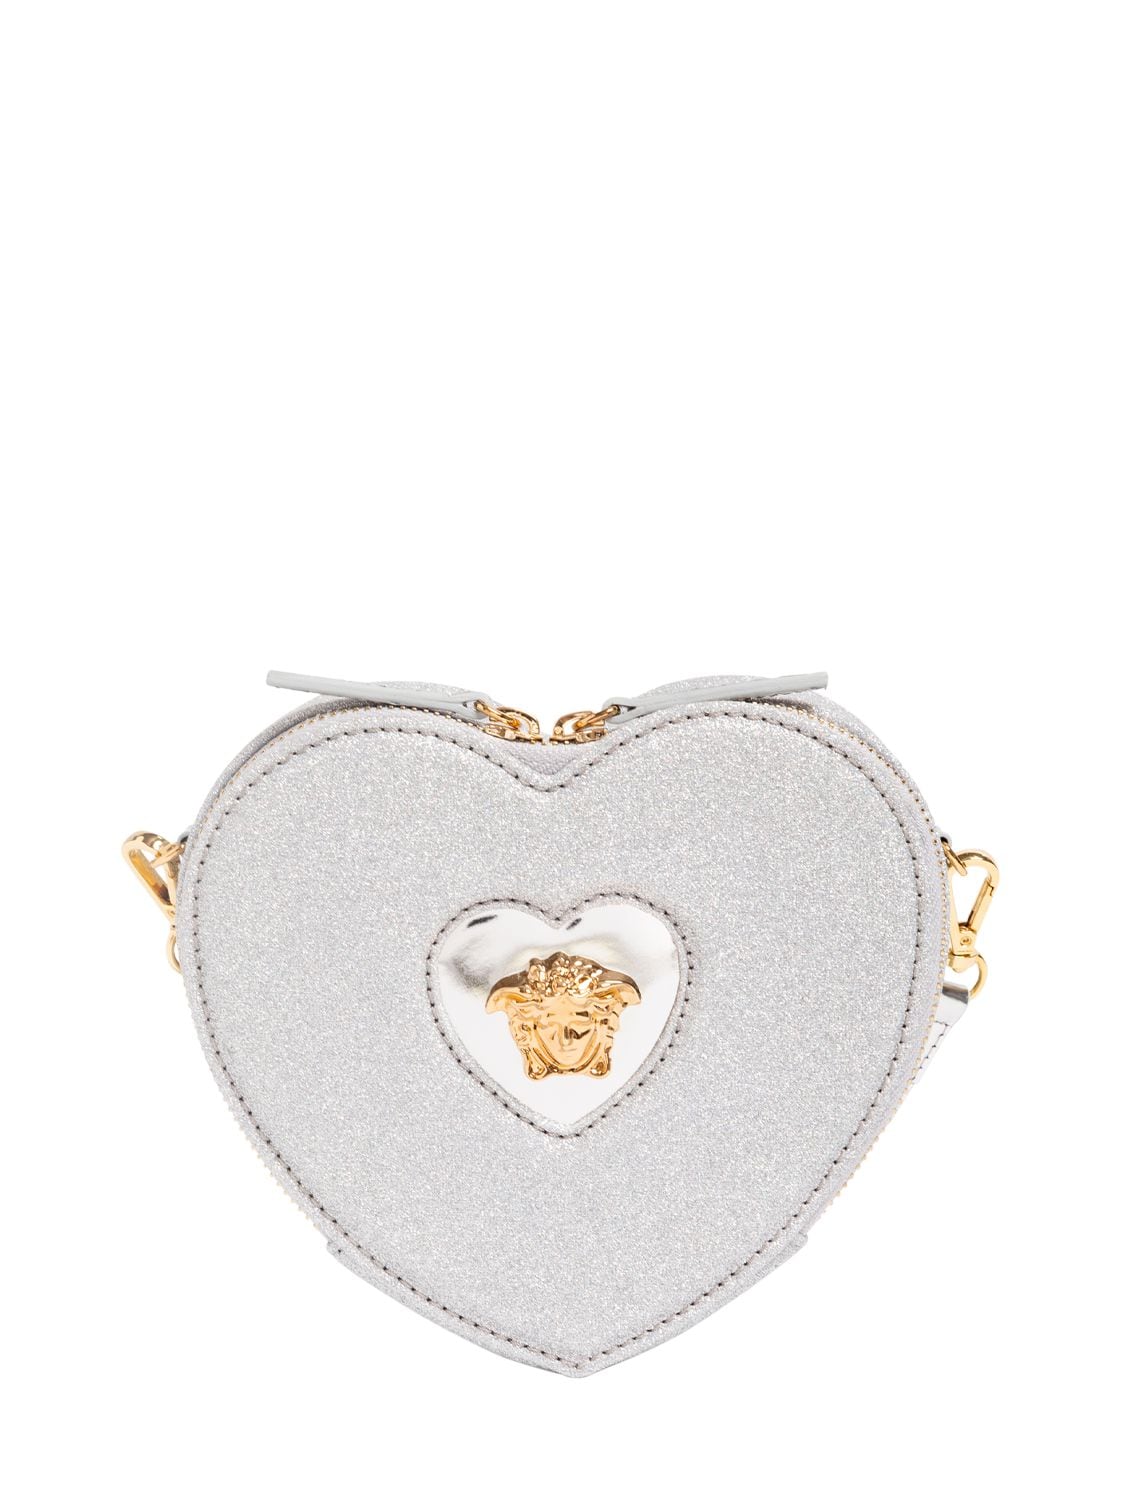 Versace Kids' Glittered Heart Shoulder Bag W/ Medusa In Silver